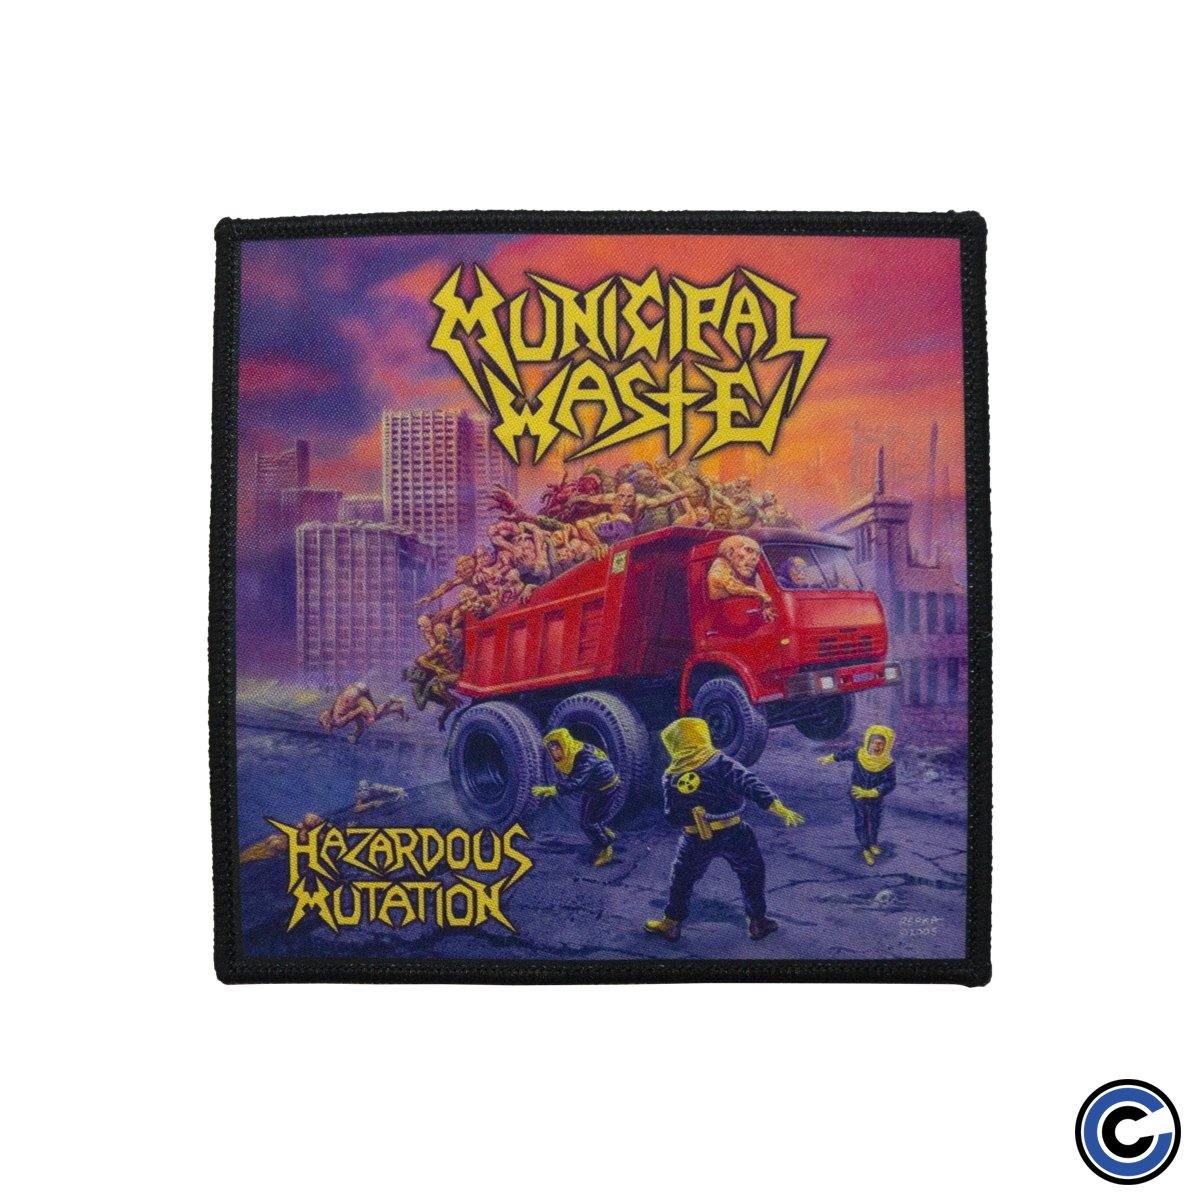 Buy – Municipal Waste "Hazardous Mutation" Patch – Band & Music Merch – Cold Cuts Merch